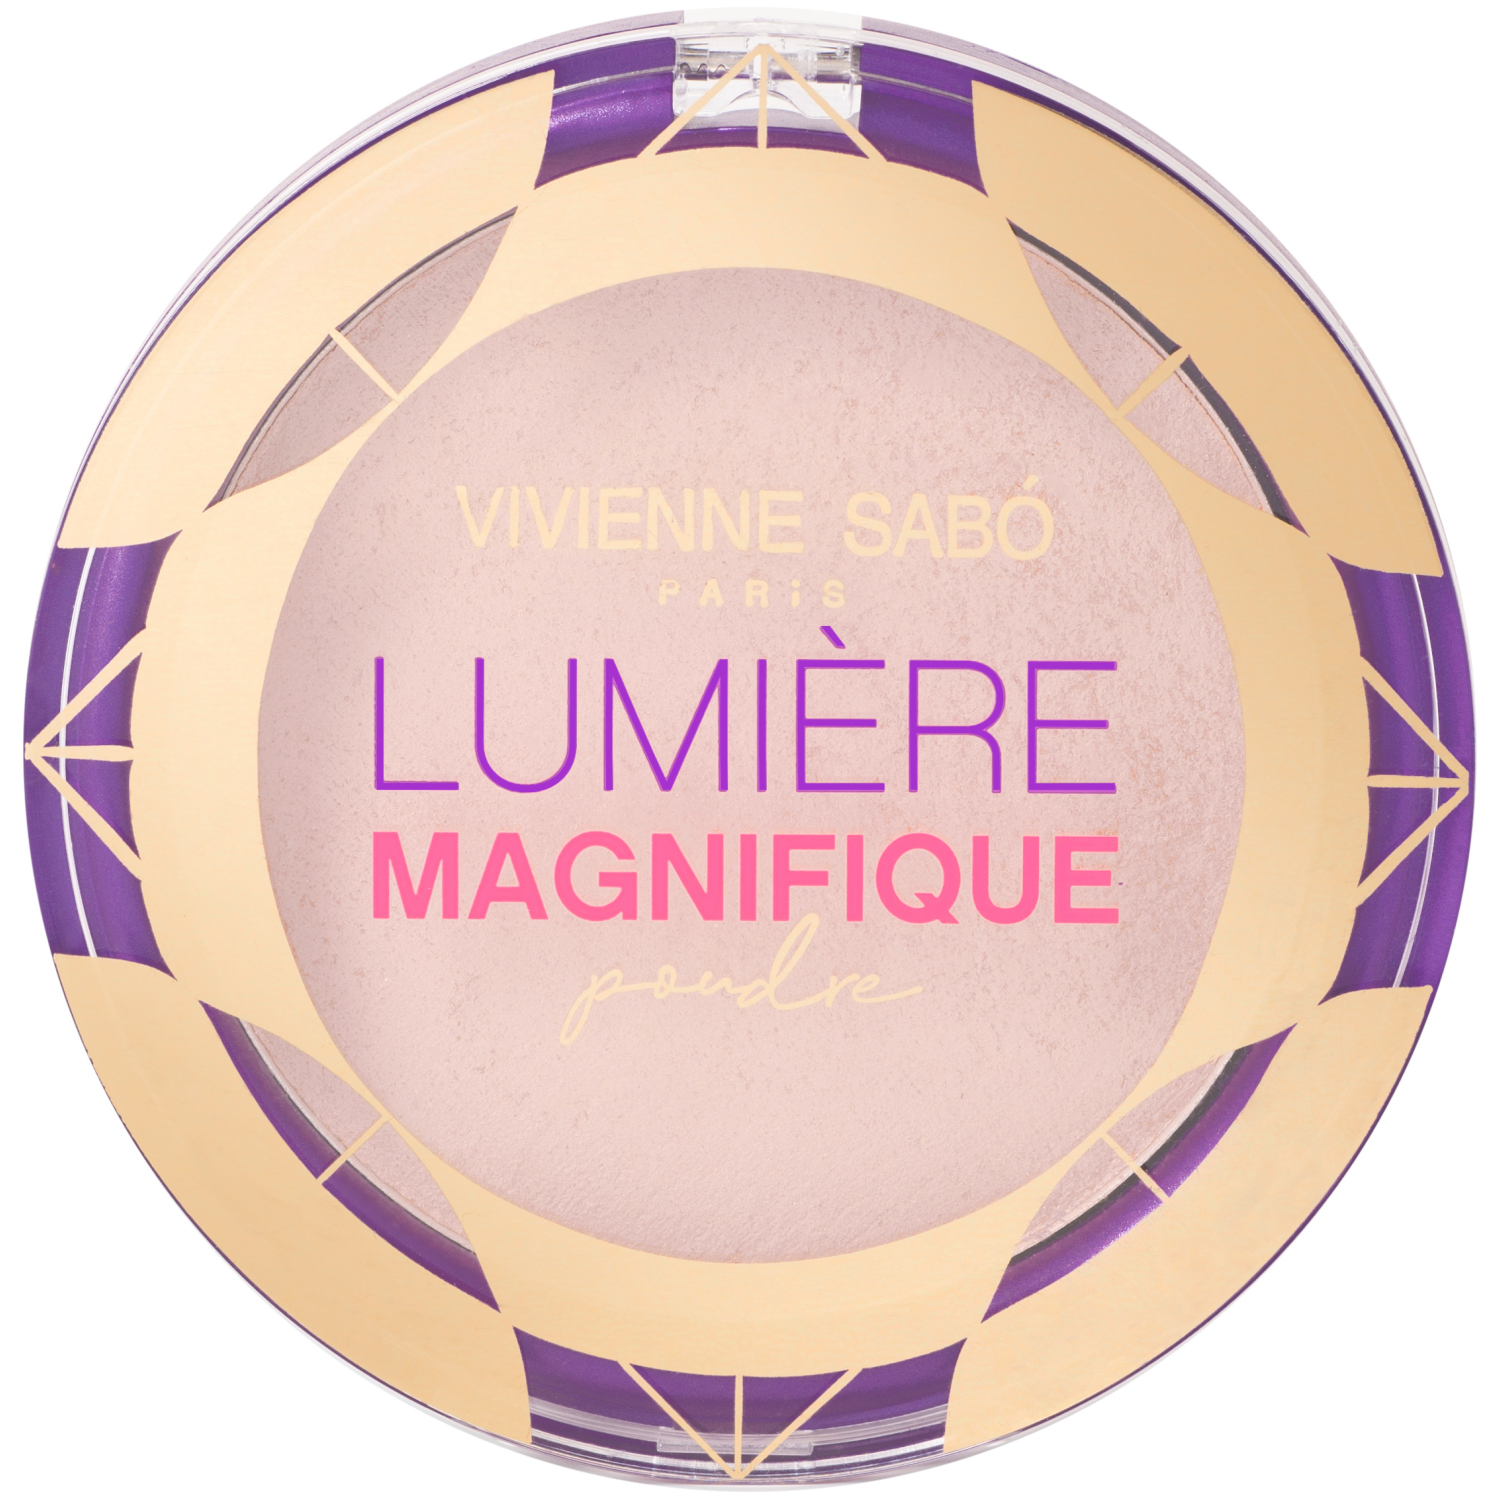 Пудра Vivienne Sabo Lumiere Magnifique, сияющая, бархатистая текстура, эффект мягкого фокуса, тон 02, бежевый, 6гр